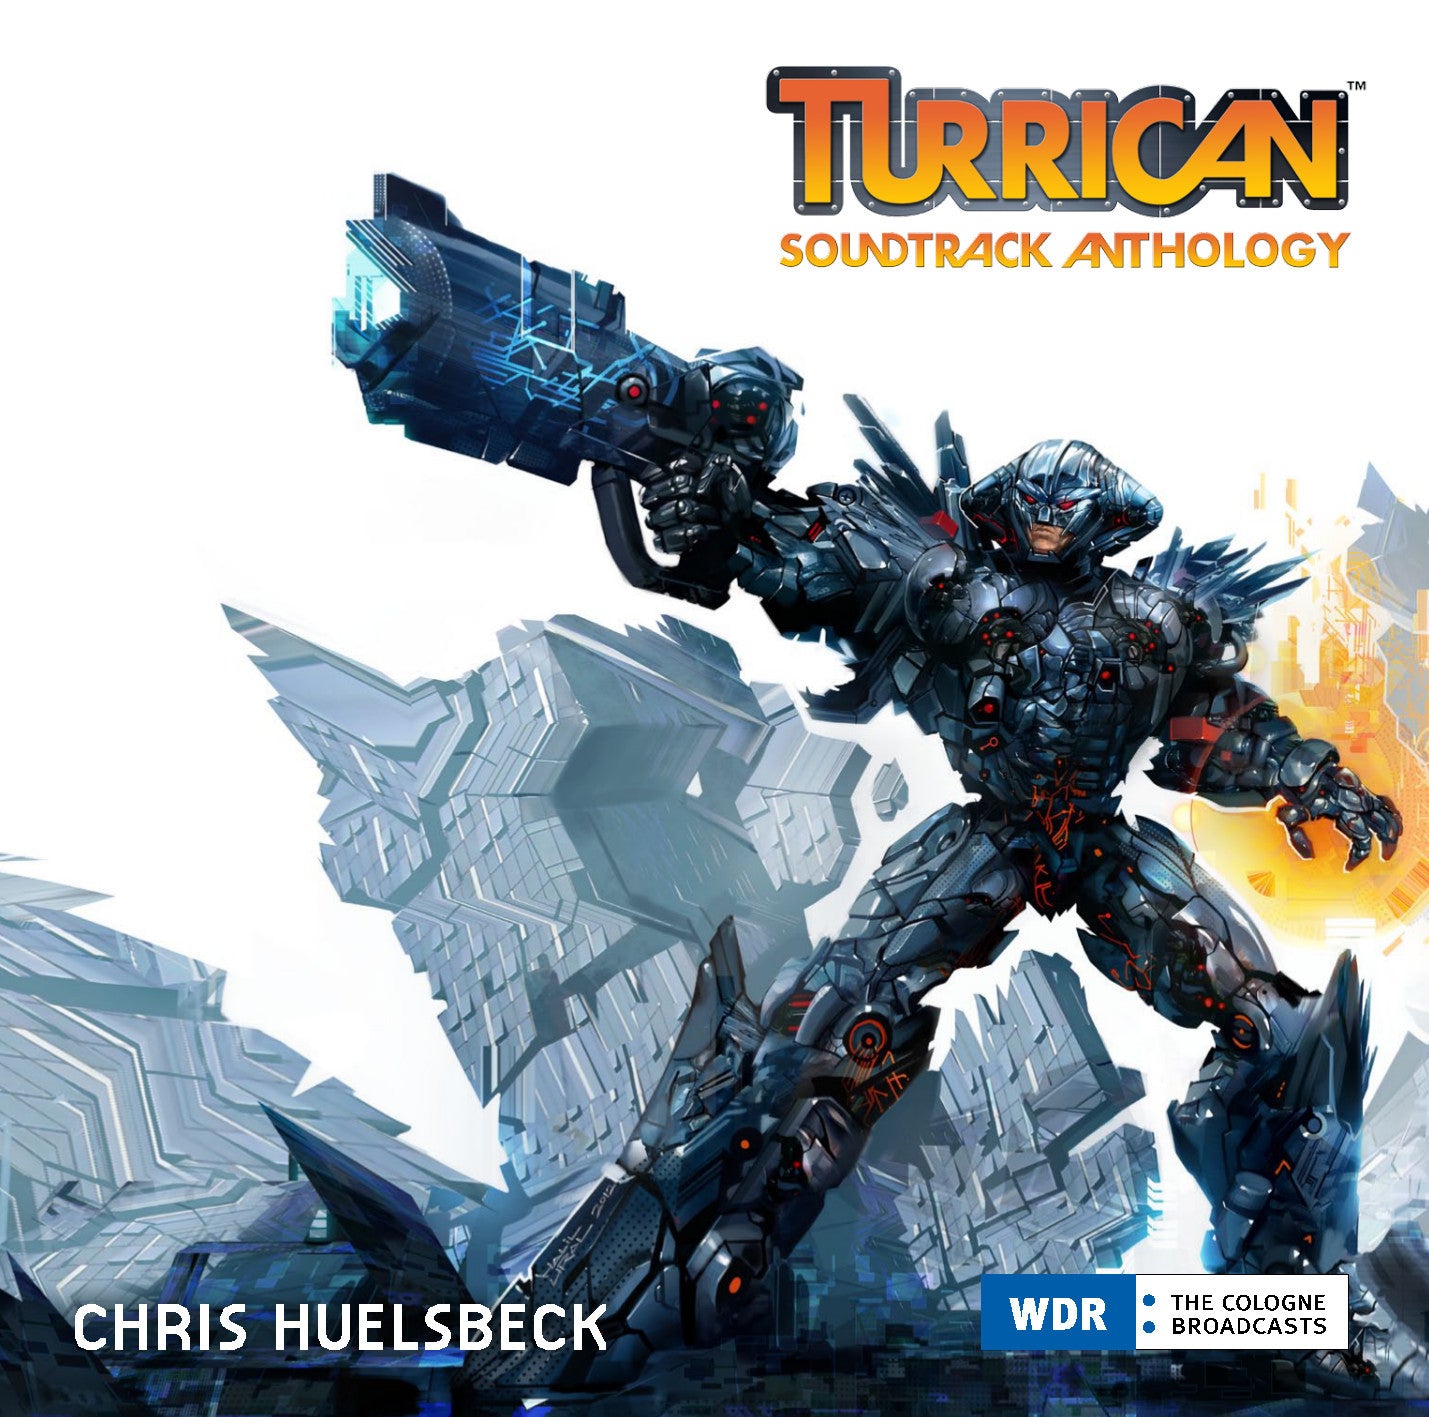 Turrican Soundtrack Anthology Limited Edition Box Set (Ultra Rare)